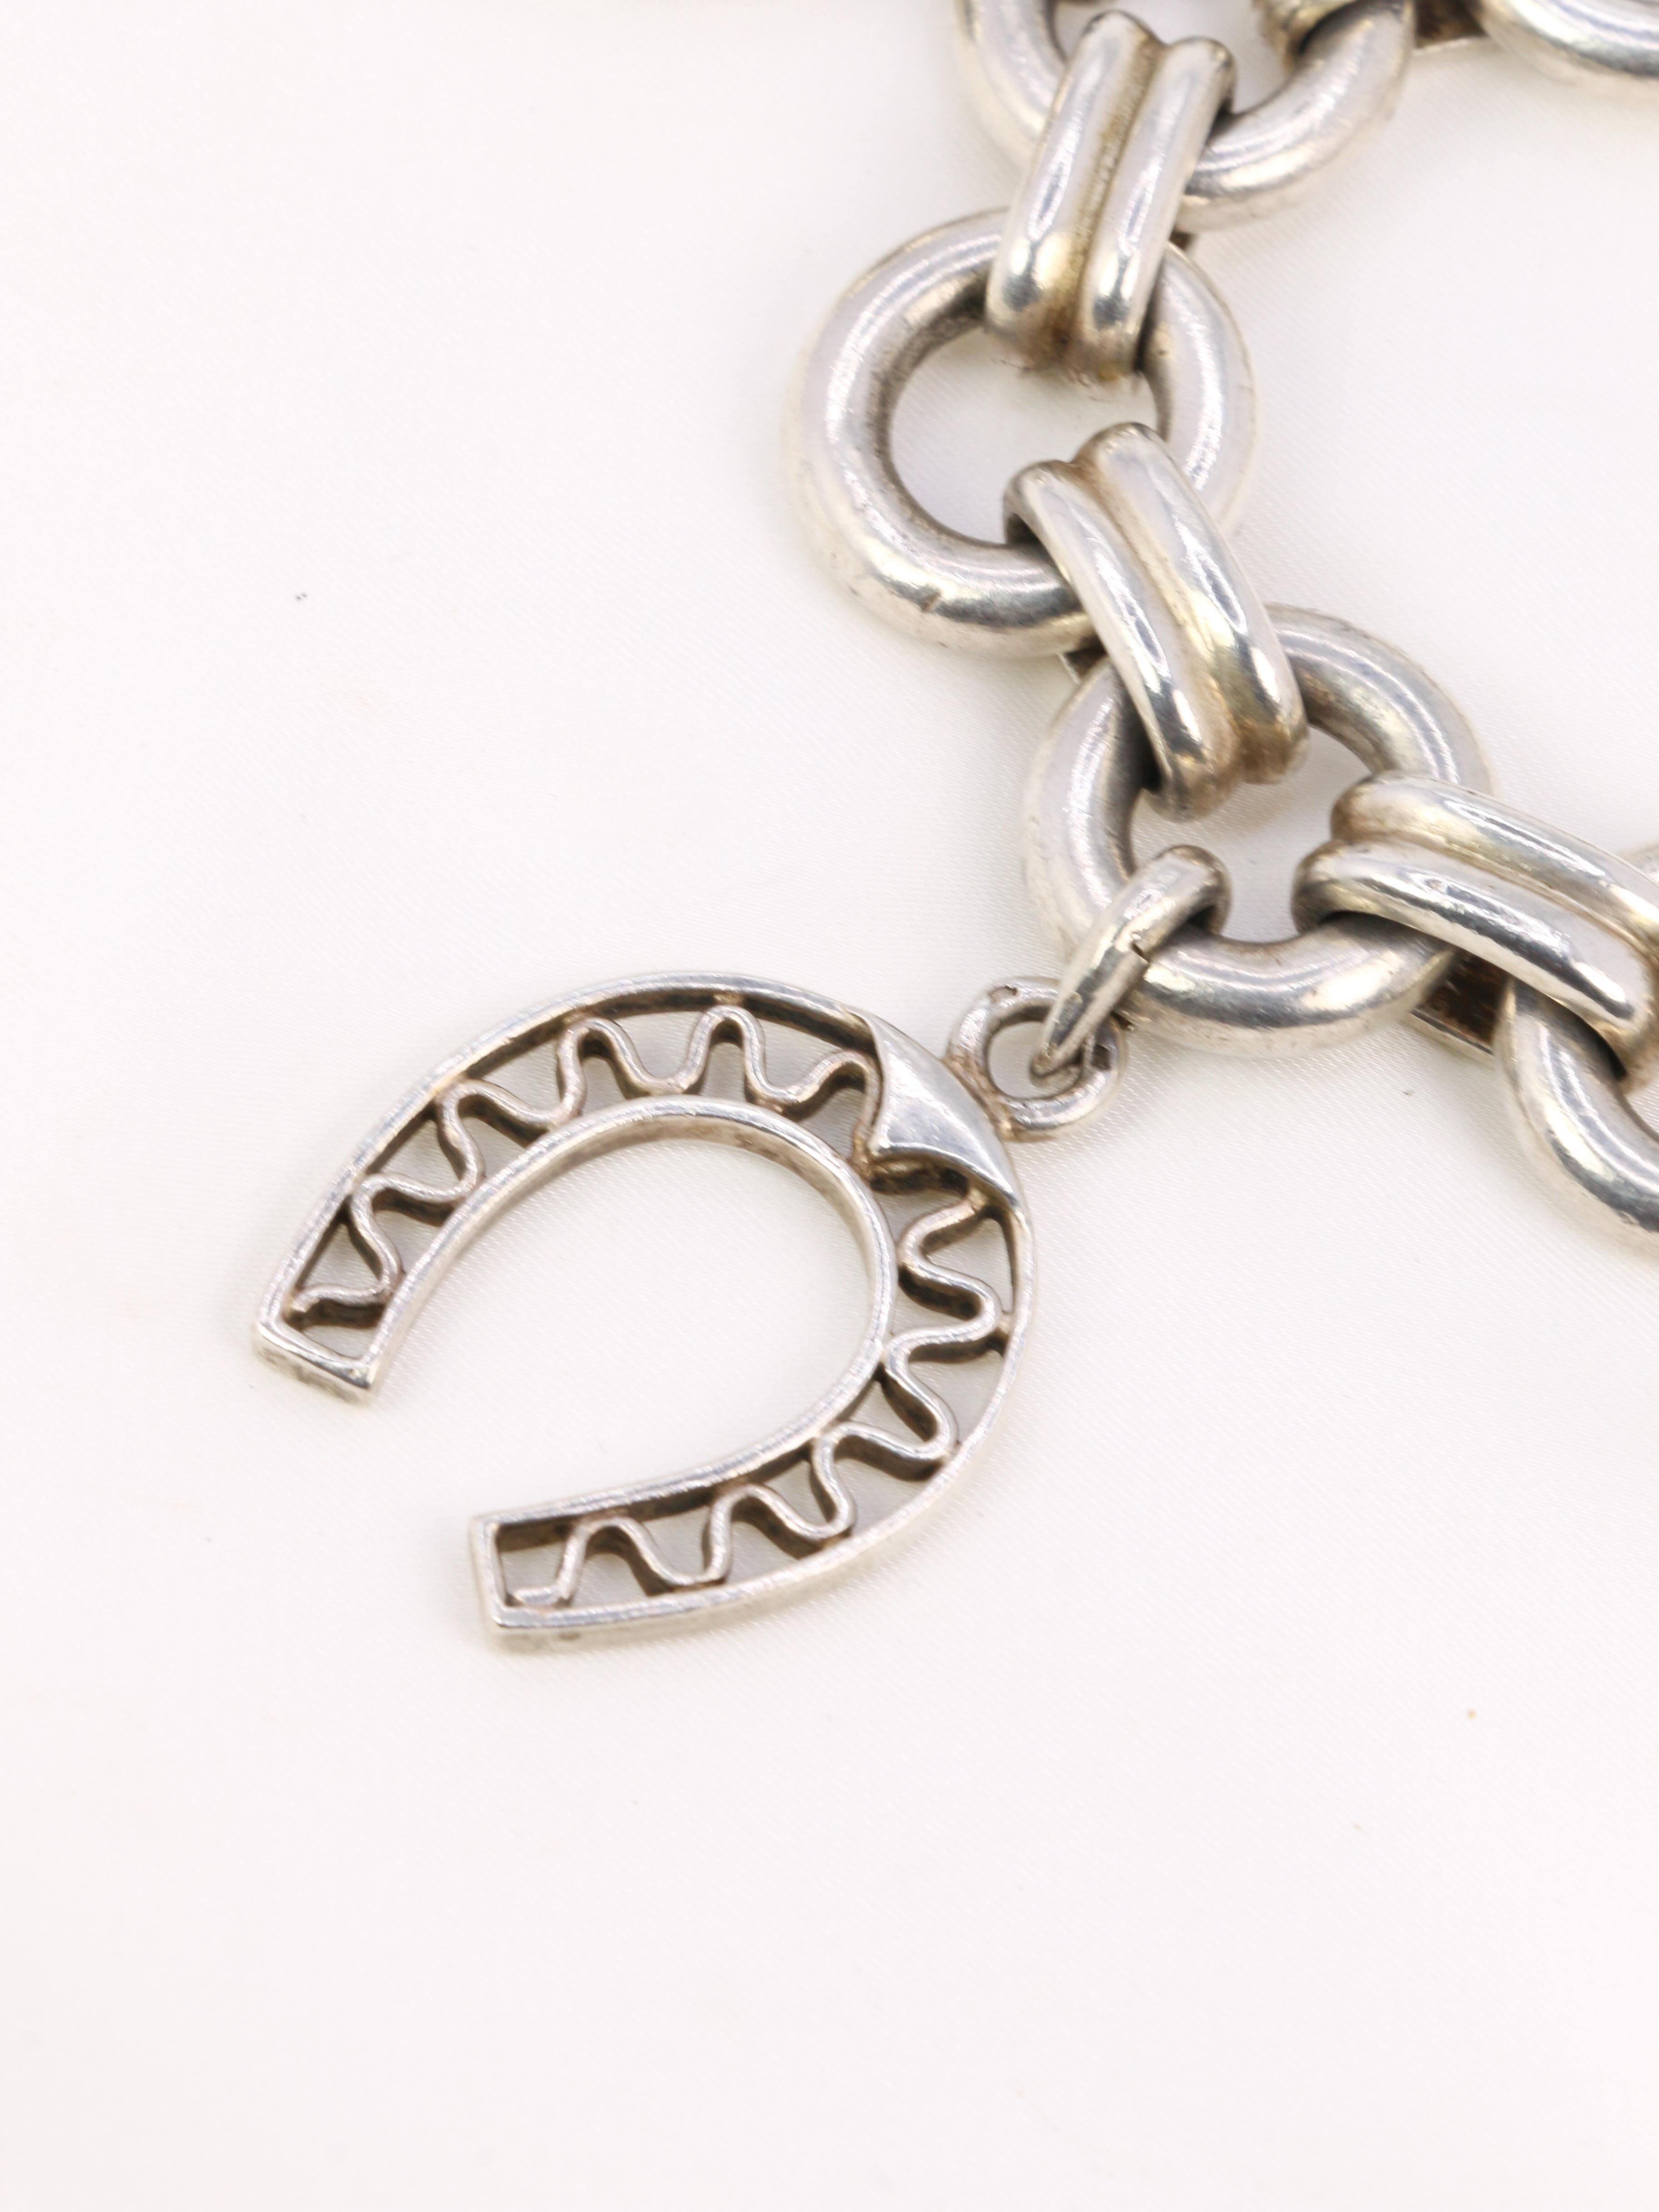 Gaétan de Percin (att. to HERMES) Silver bracelet and equestrian charms  For Sale 4